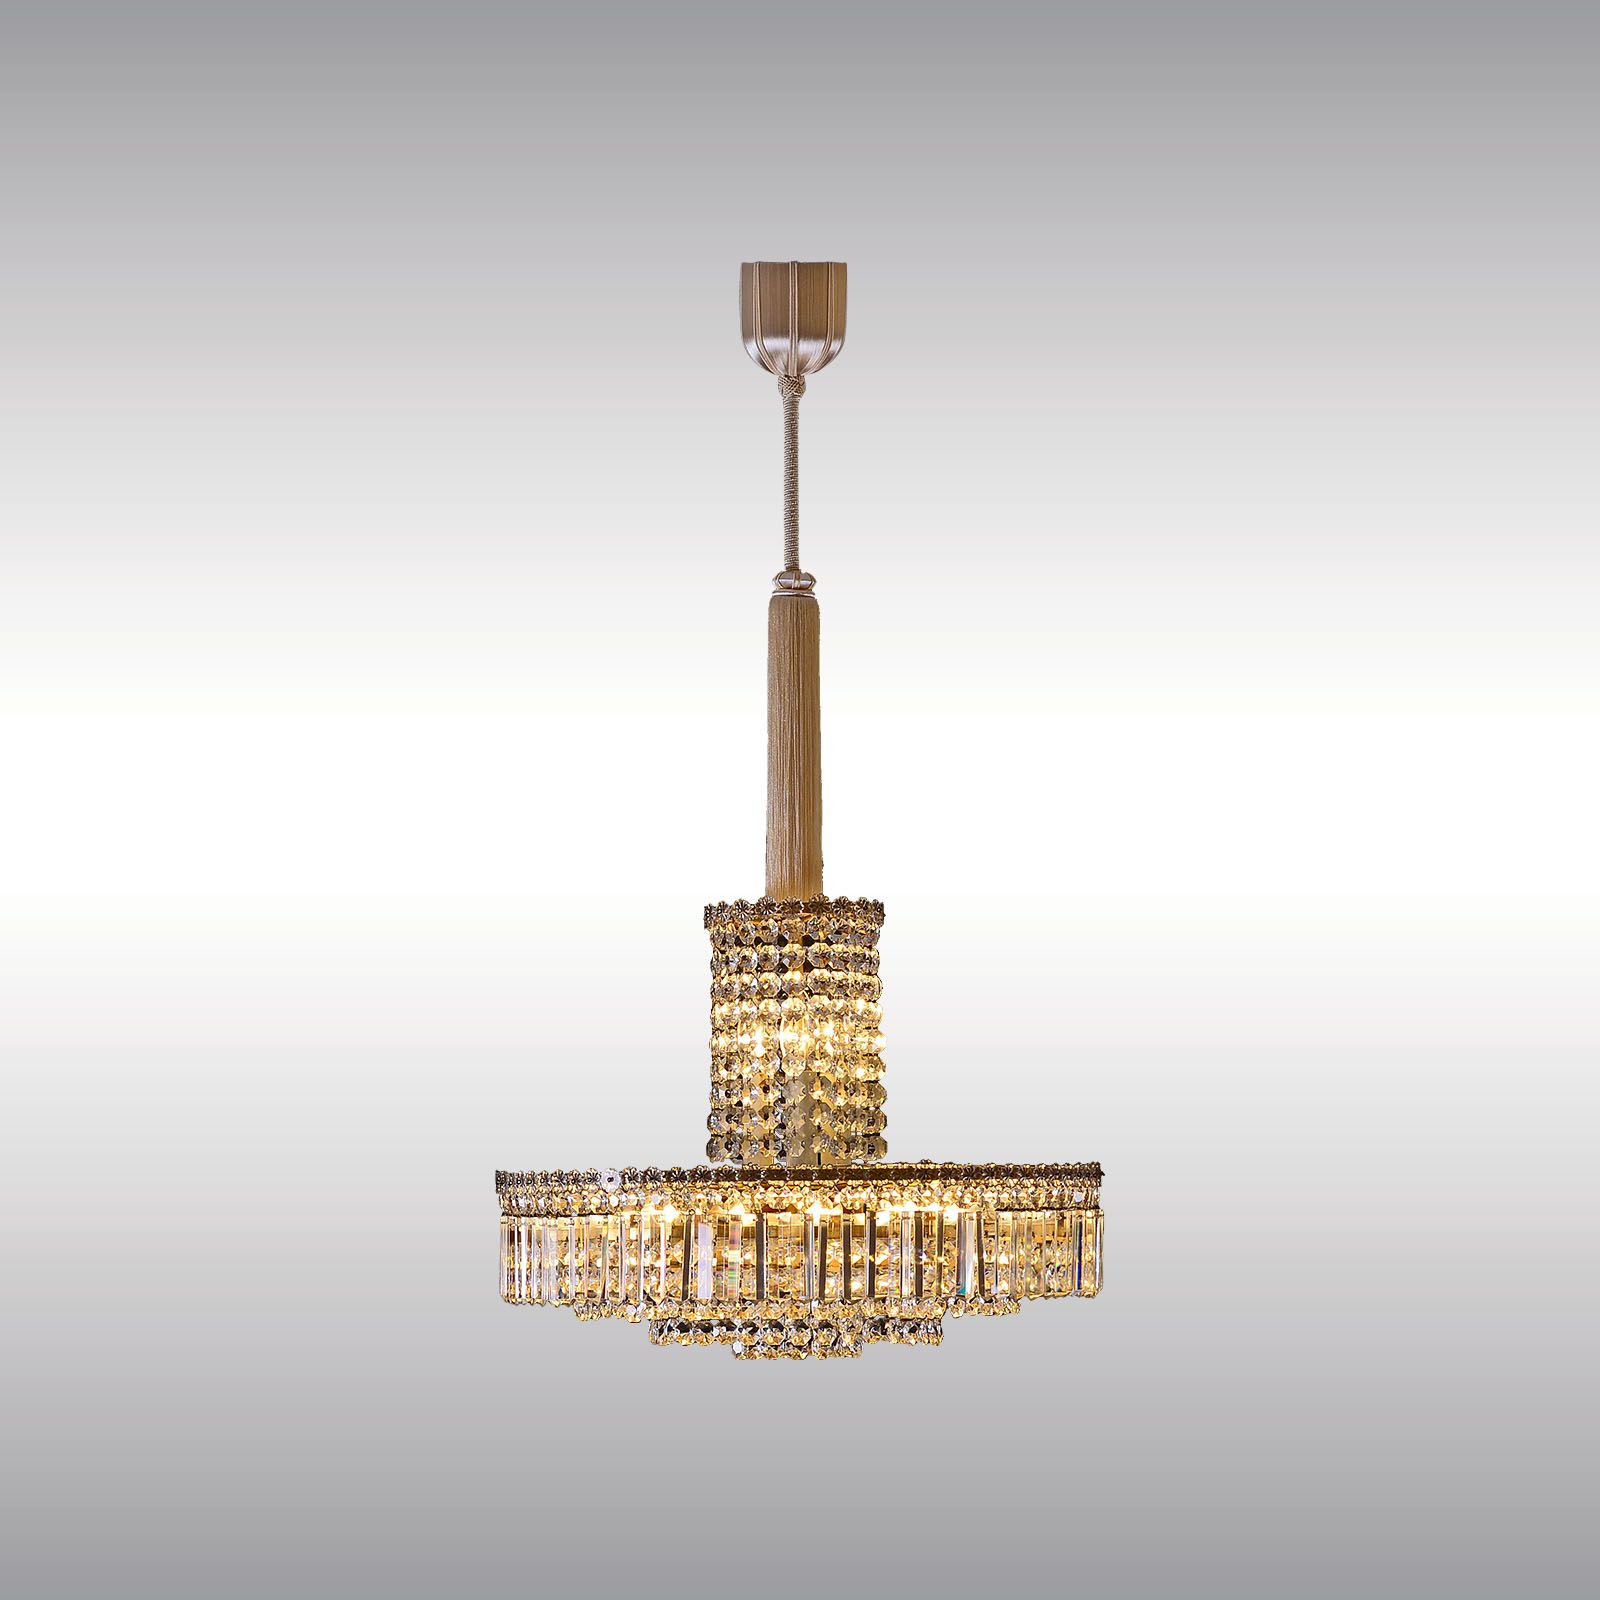 WOKA LAMPS VIENNA - OrderNr.: 80076|Very Elegant Bakalowits Chandelier from the 1960s - Design: Bakalowits